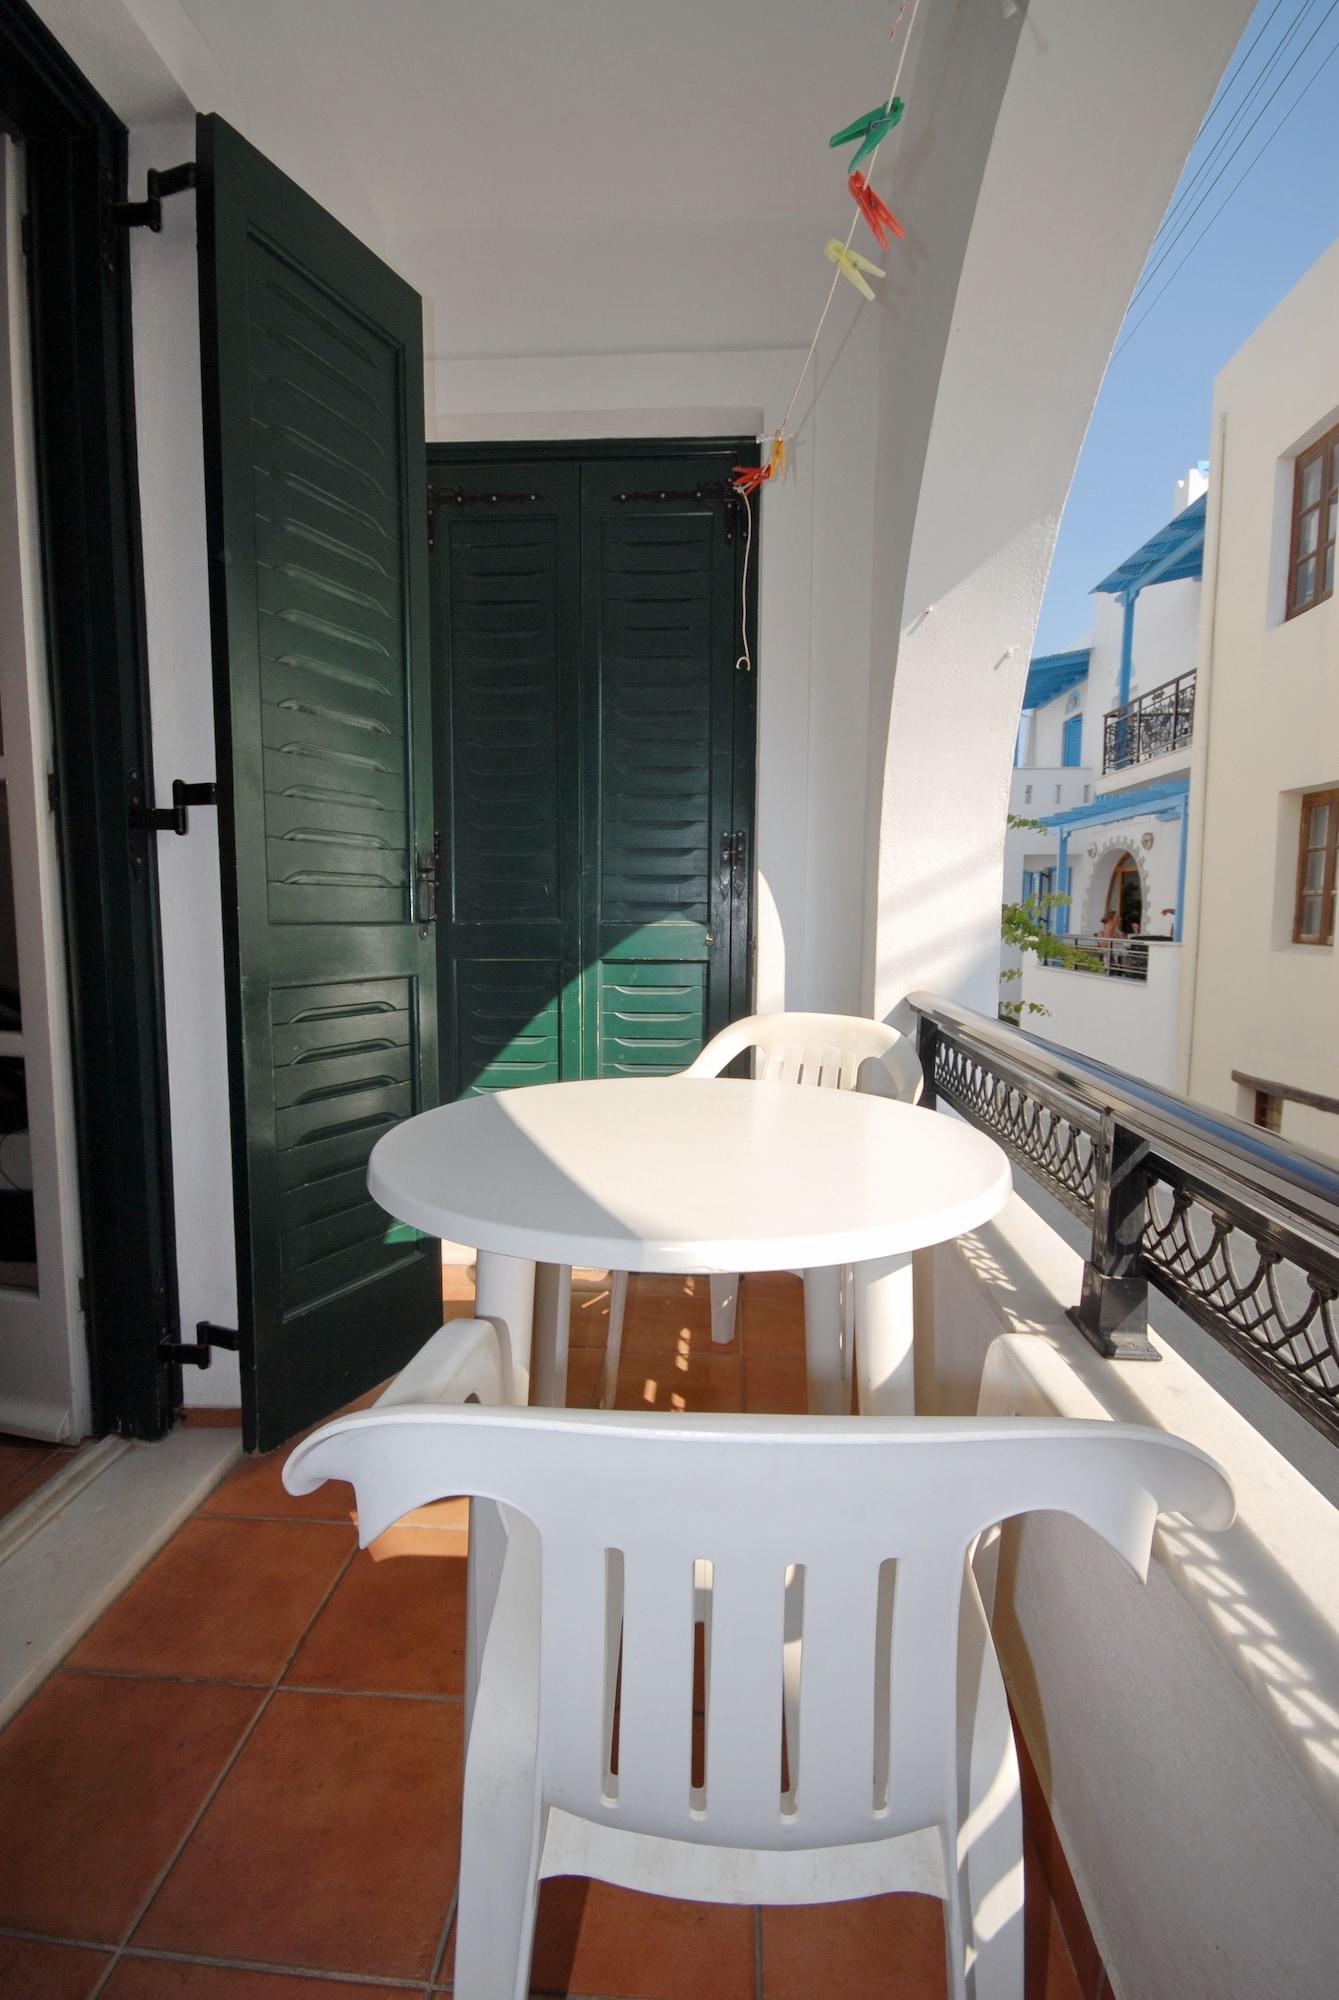 Jason Studios & Apartments Naxos City Exterior foto